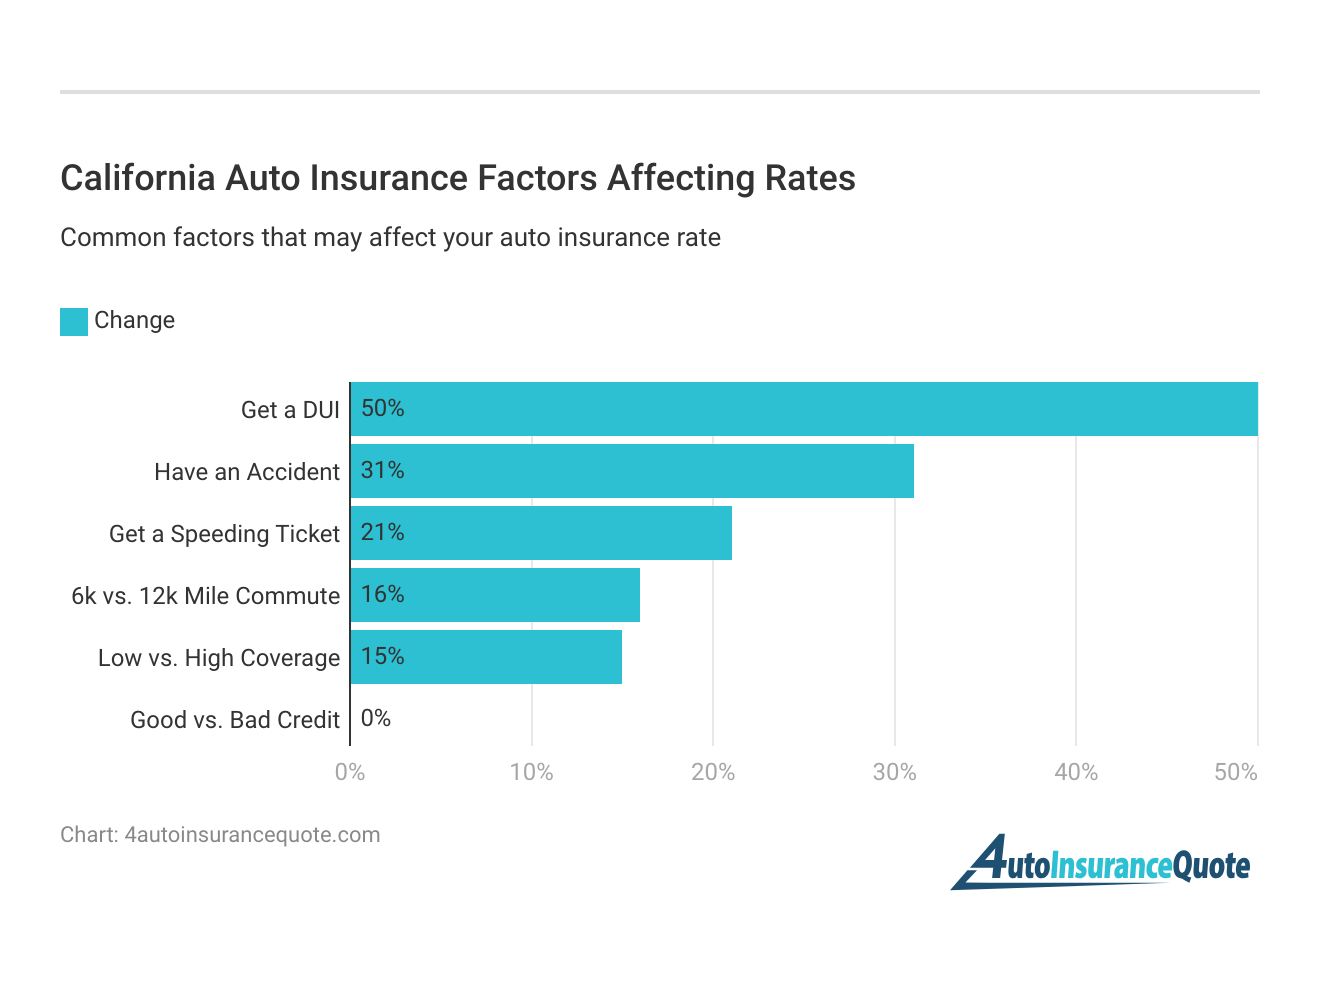 <h3>California Auto Insurance Factors Affecting Rates</h3>